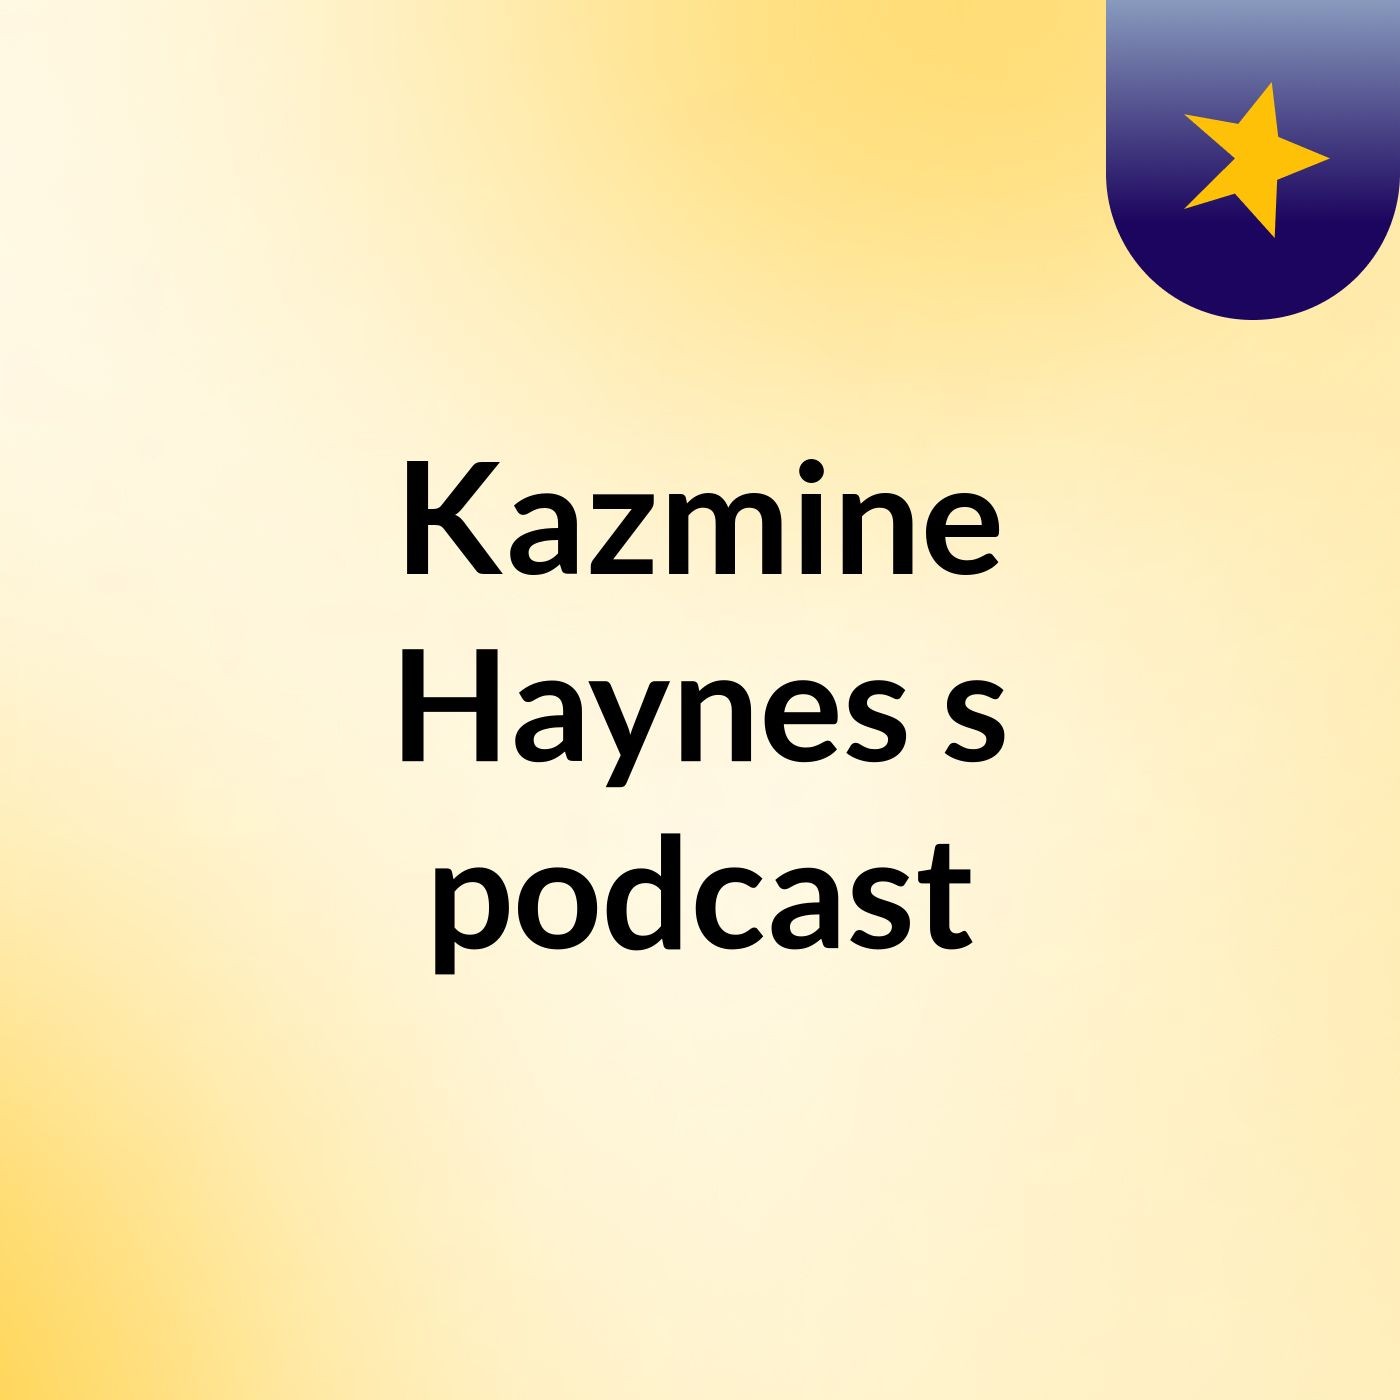 Kazmine Haynes's podcast